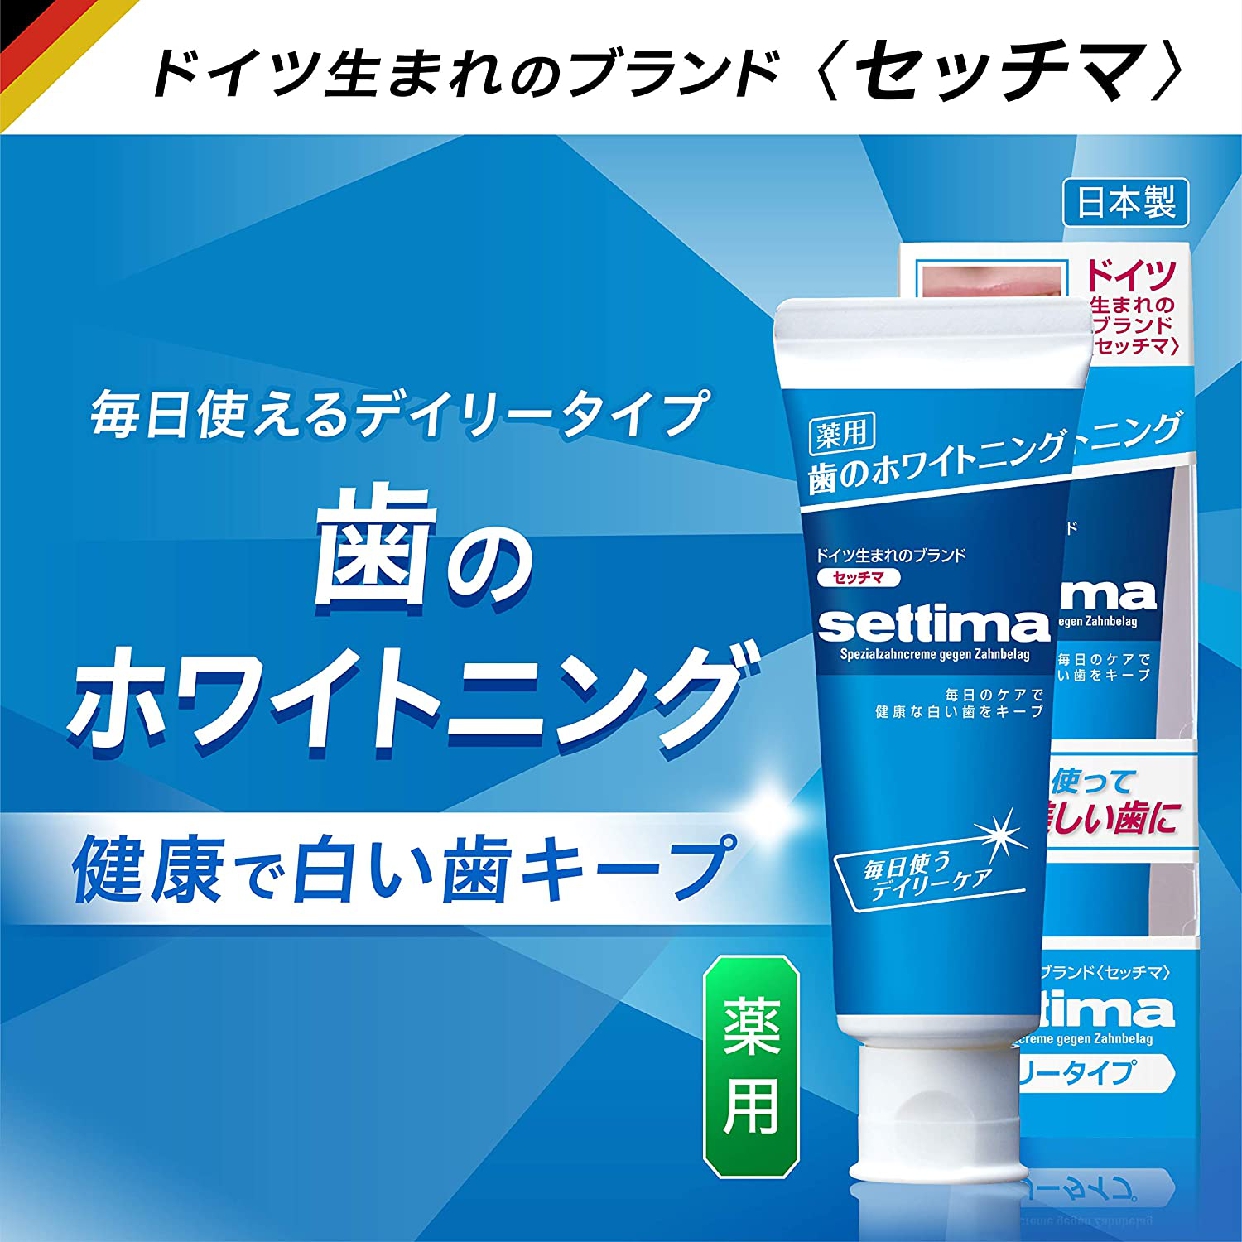 settima(セッチマ) はみがき デイリータイプの商品画像2 